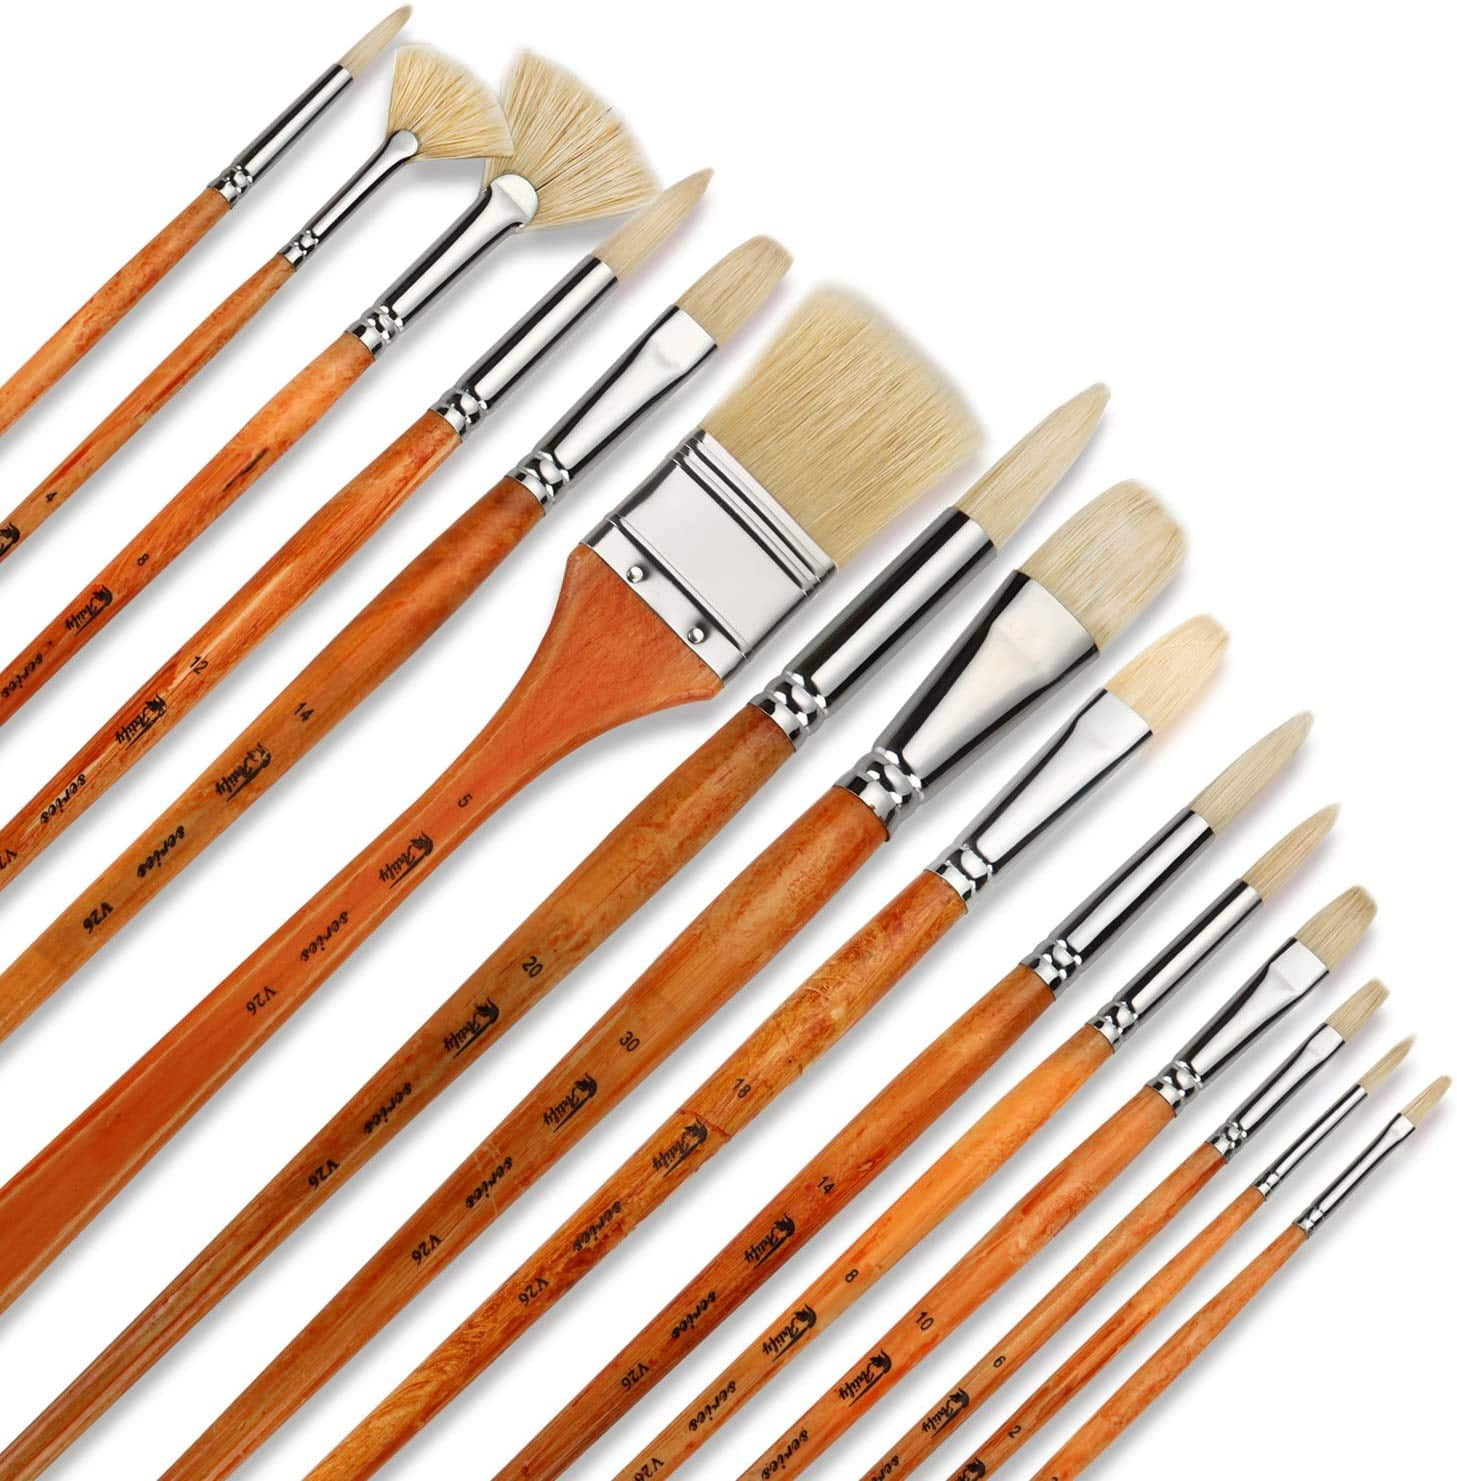 ARTIFY 24 Pieces Paint Brush Set, Expert Series, Enhanced